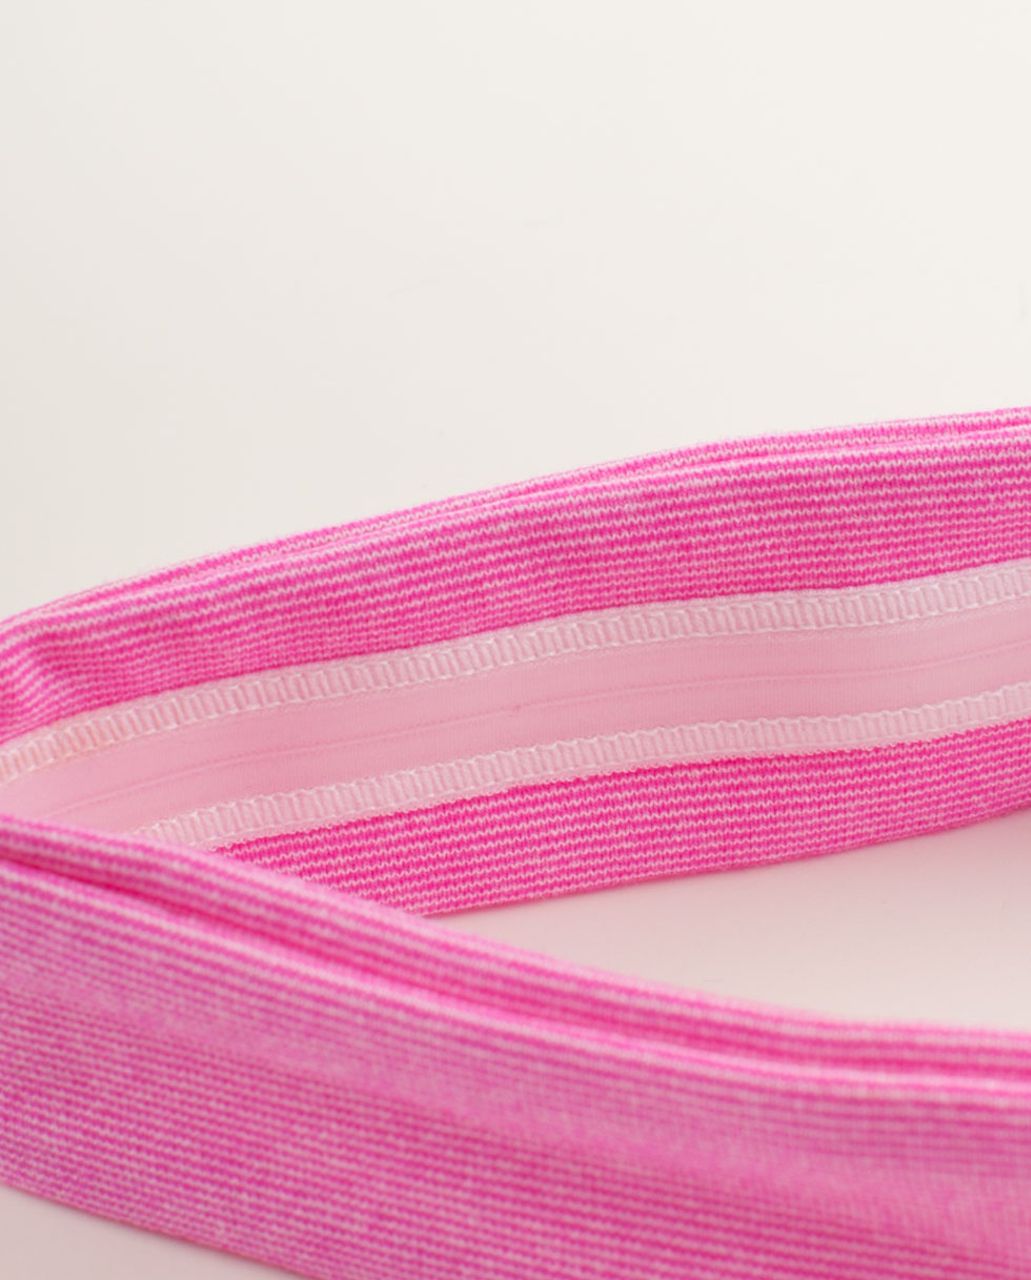 Lululemon Slipless Headband - Heathered Paris Pink White Microstripe